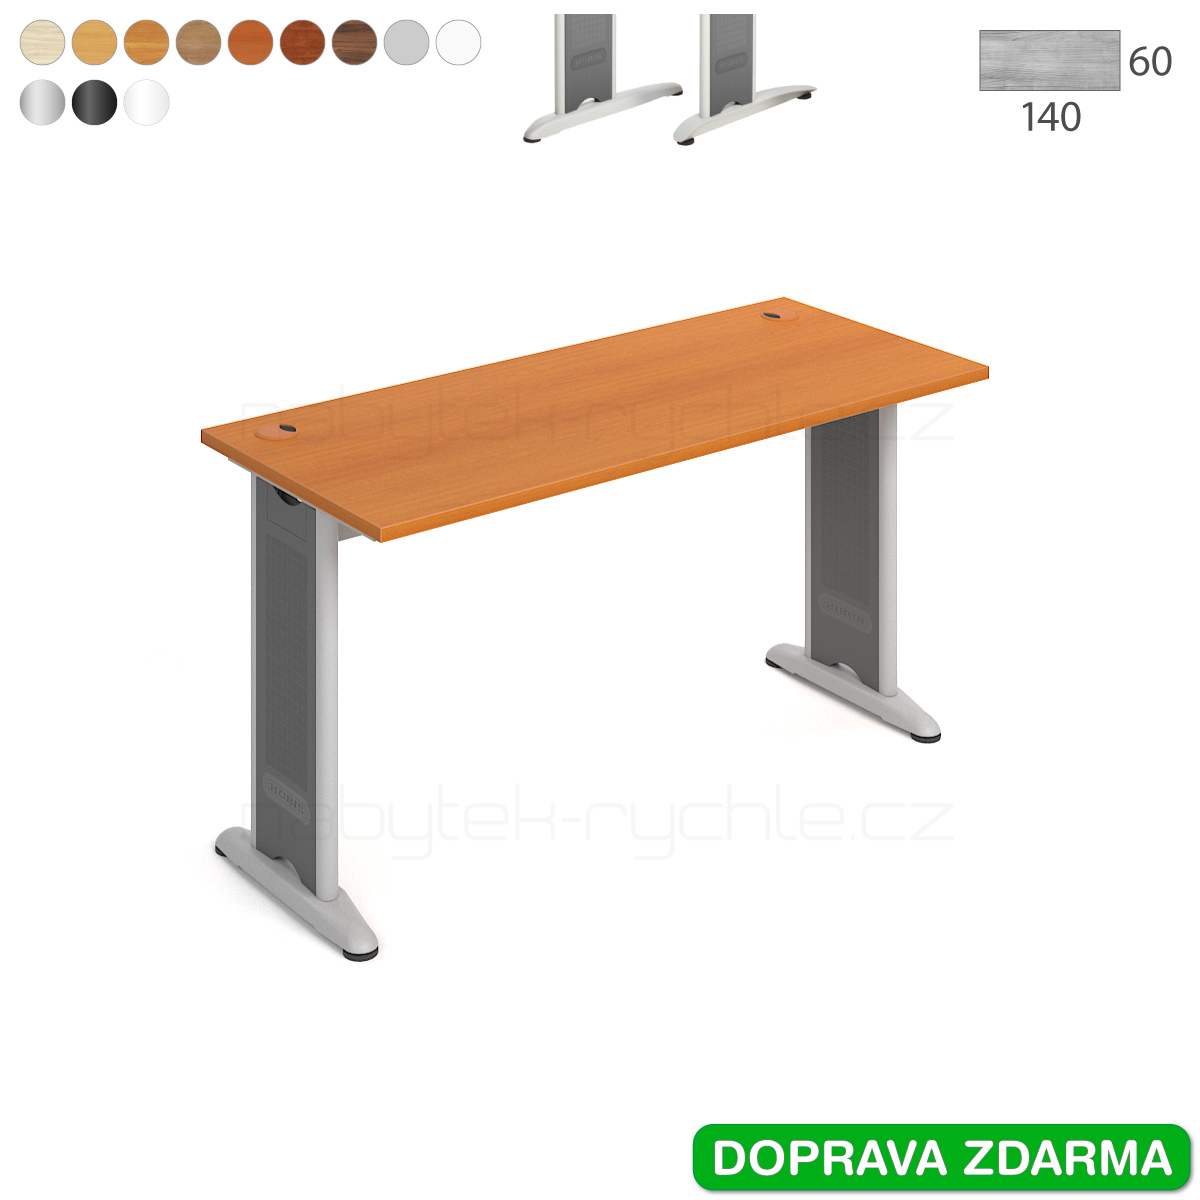 FE 1400 Hobis Flex - Stůl 140 x 60